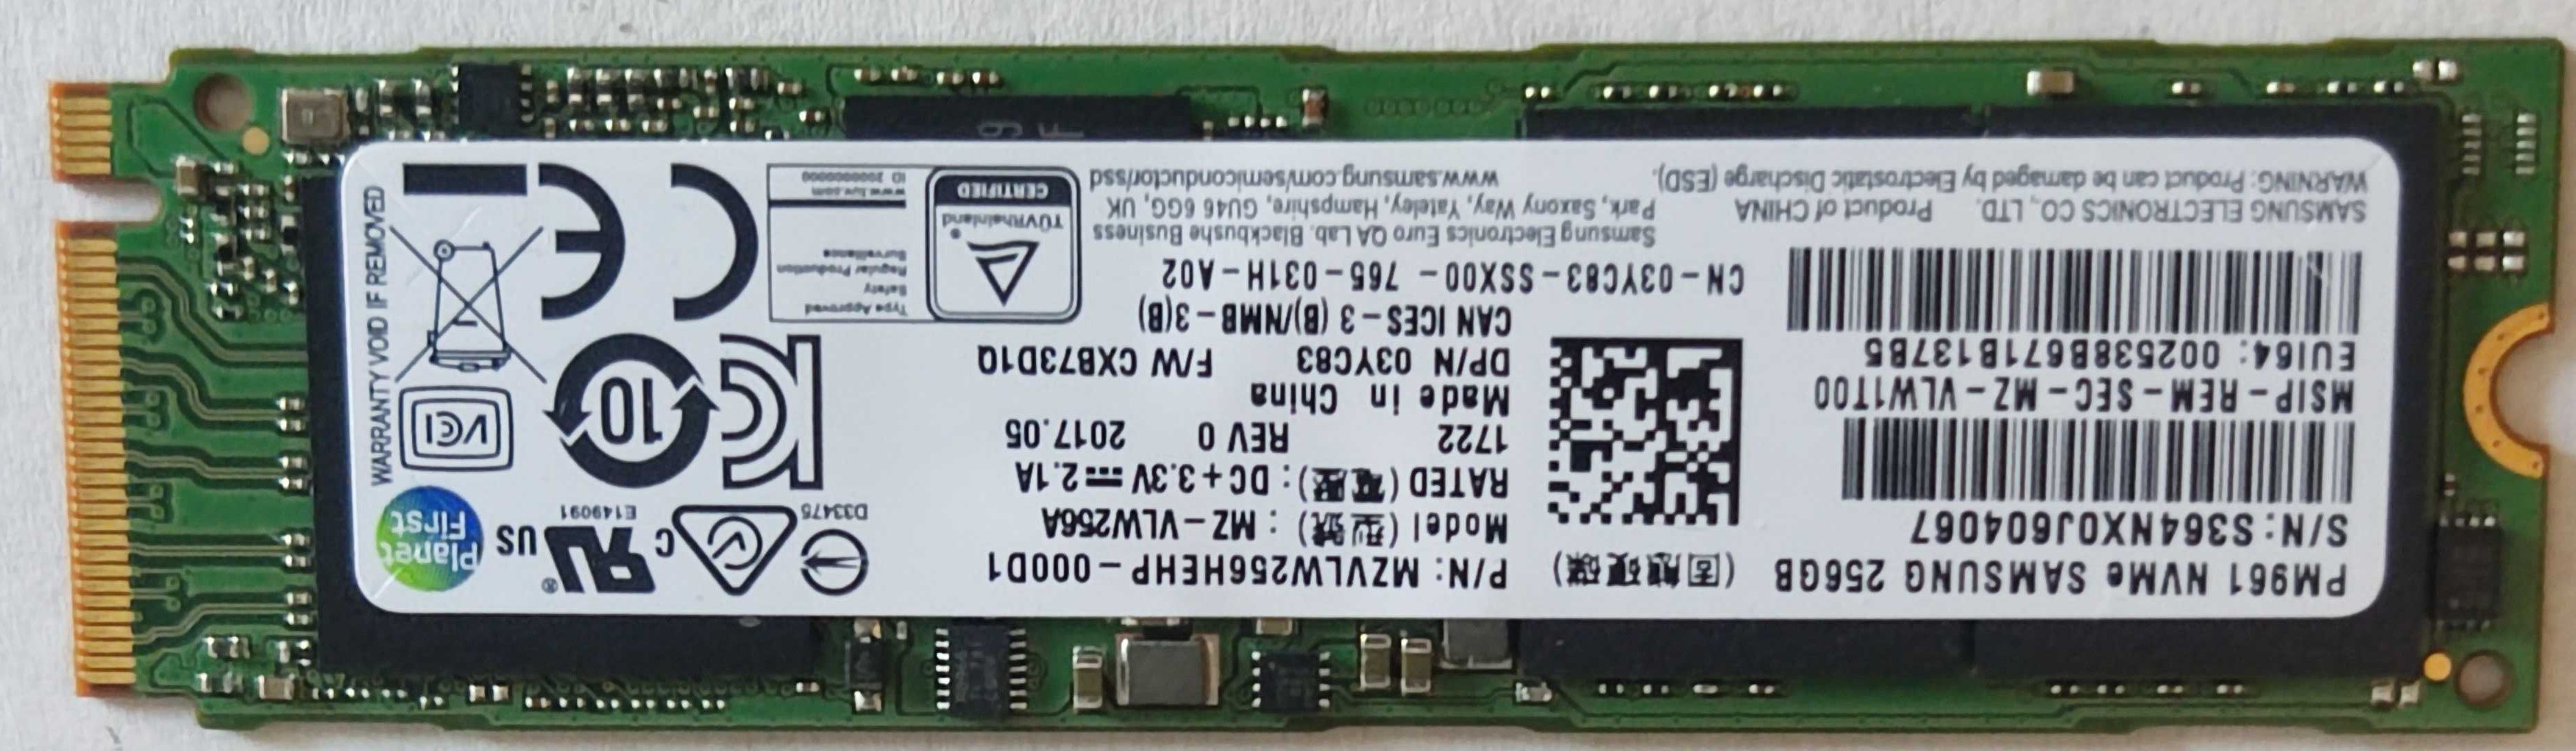 Dysk SSD Samsung PM961 NVMe 256GB, 2280, PCIE-x4